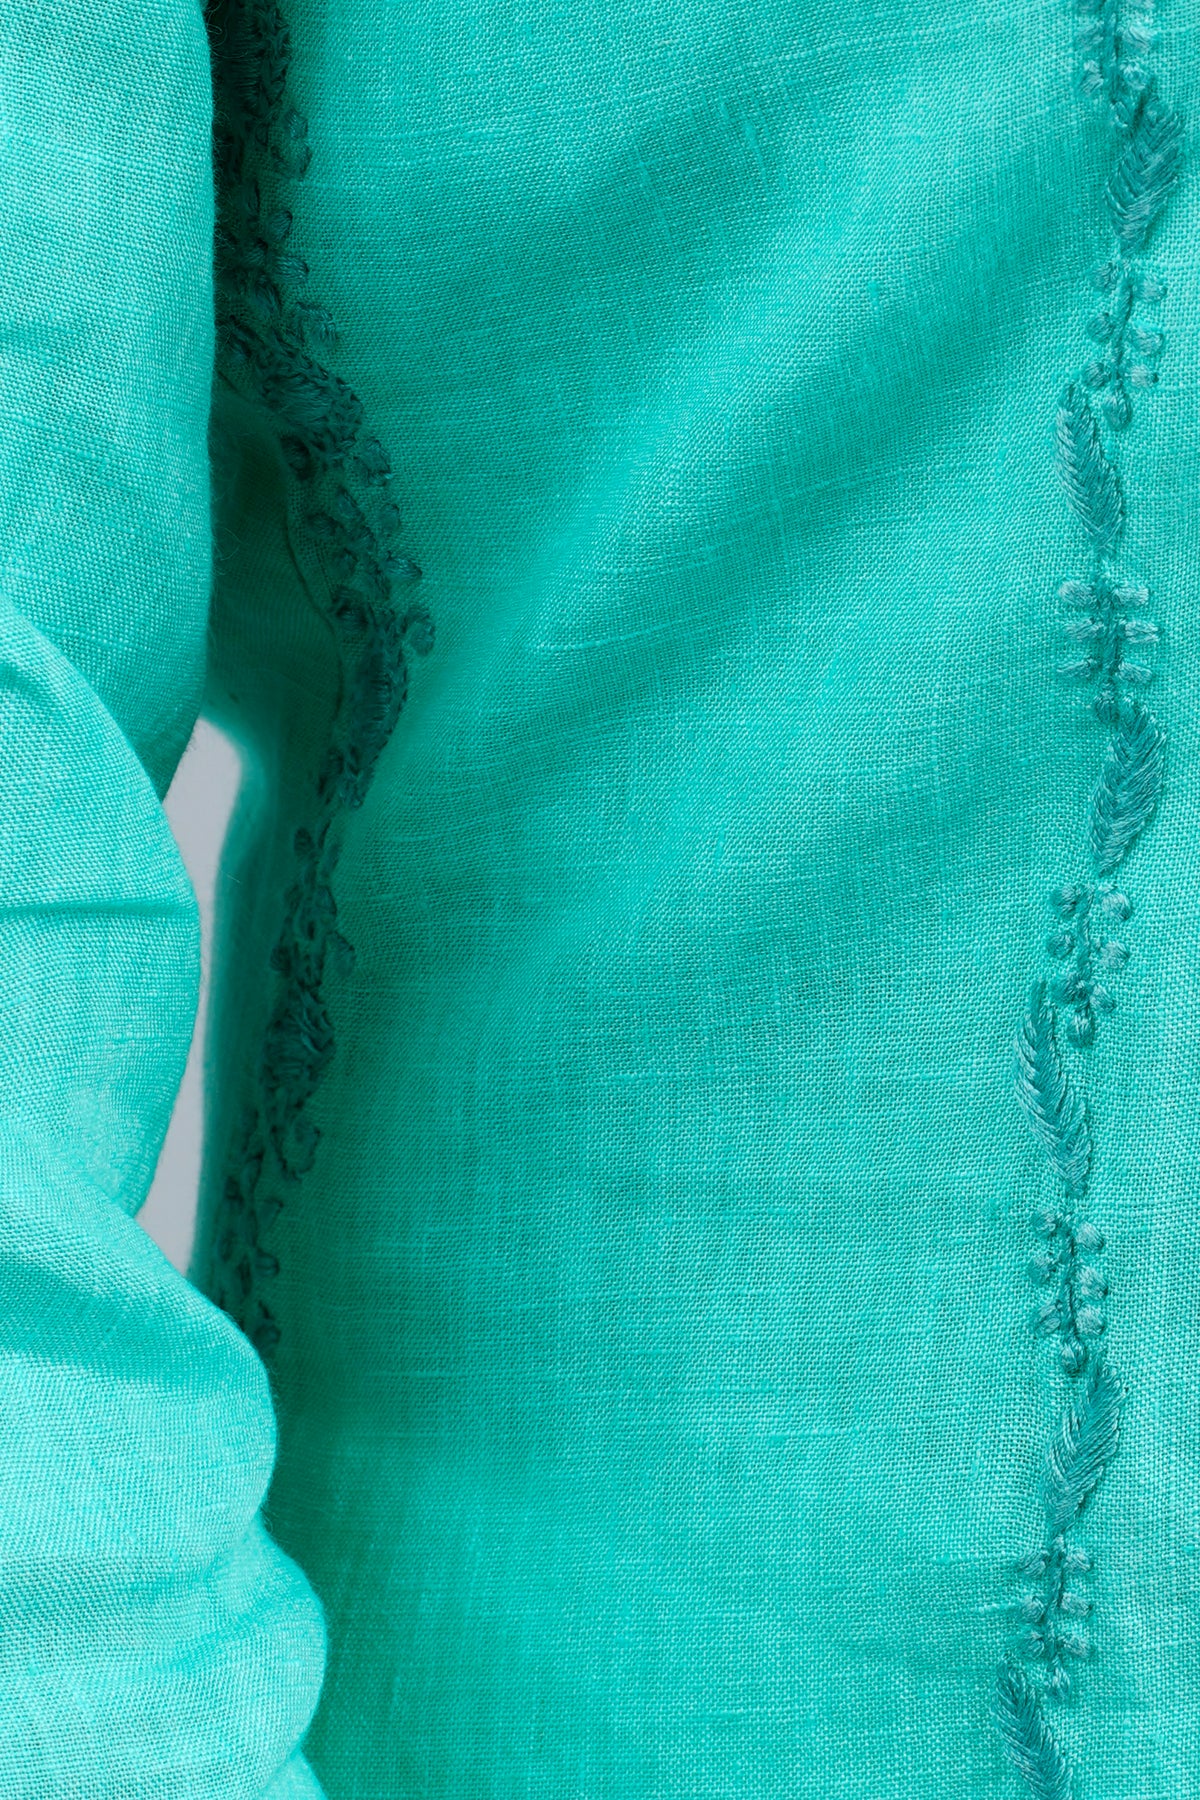 JUHI Linen-Cotton Hand Embroidered Tunic Kurti: Made to Order/Customizable